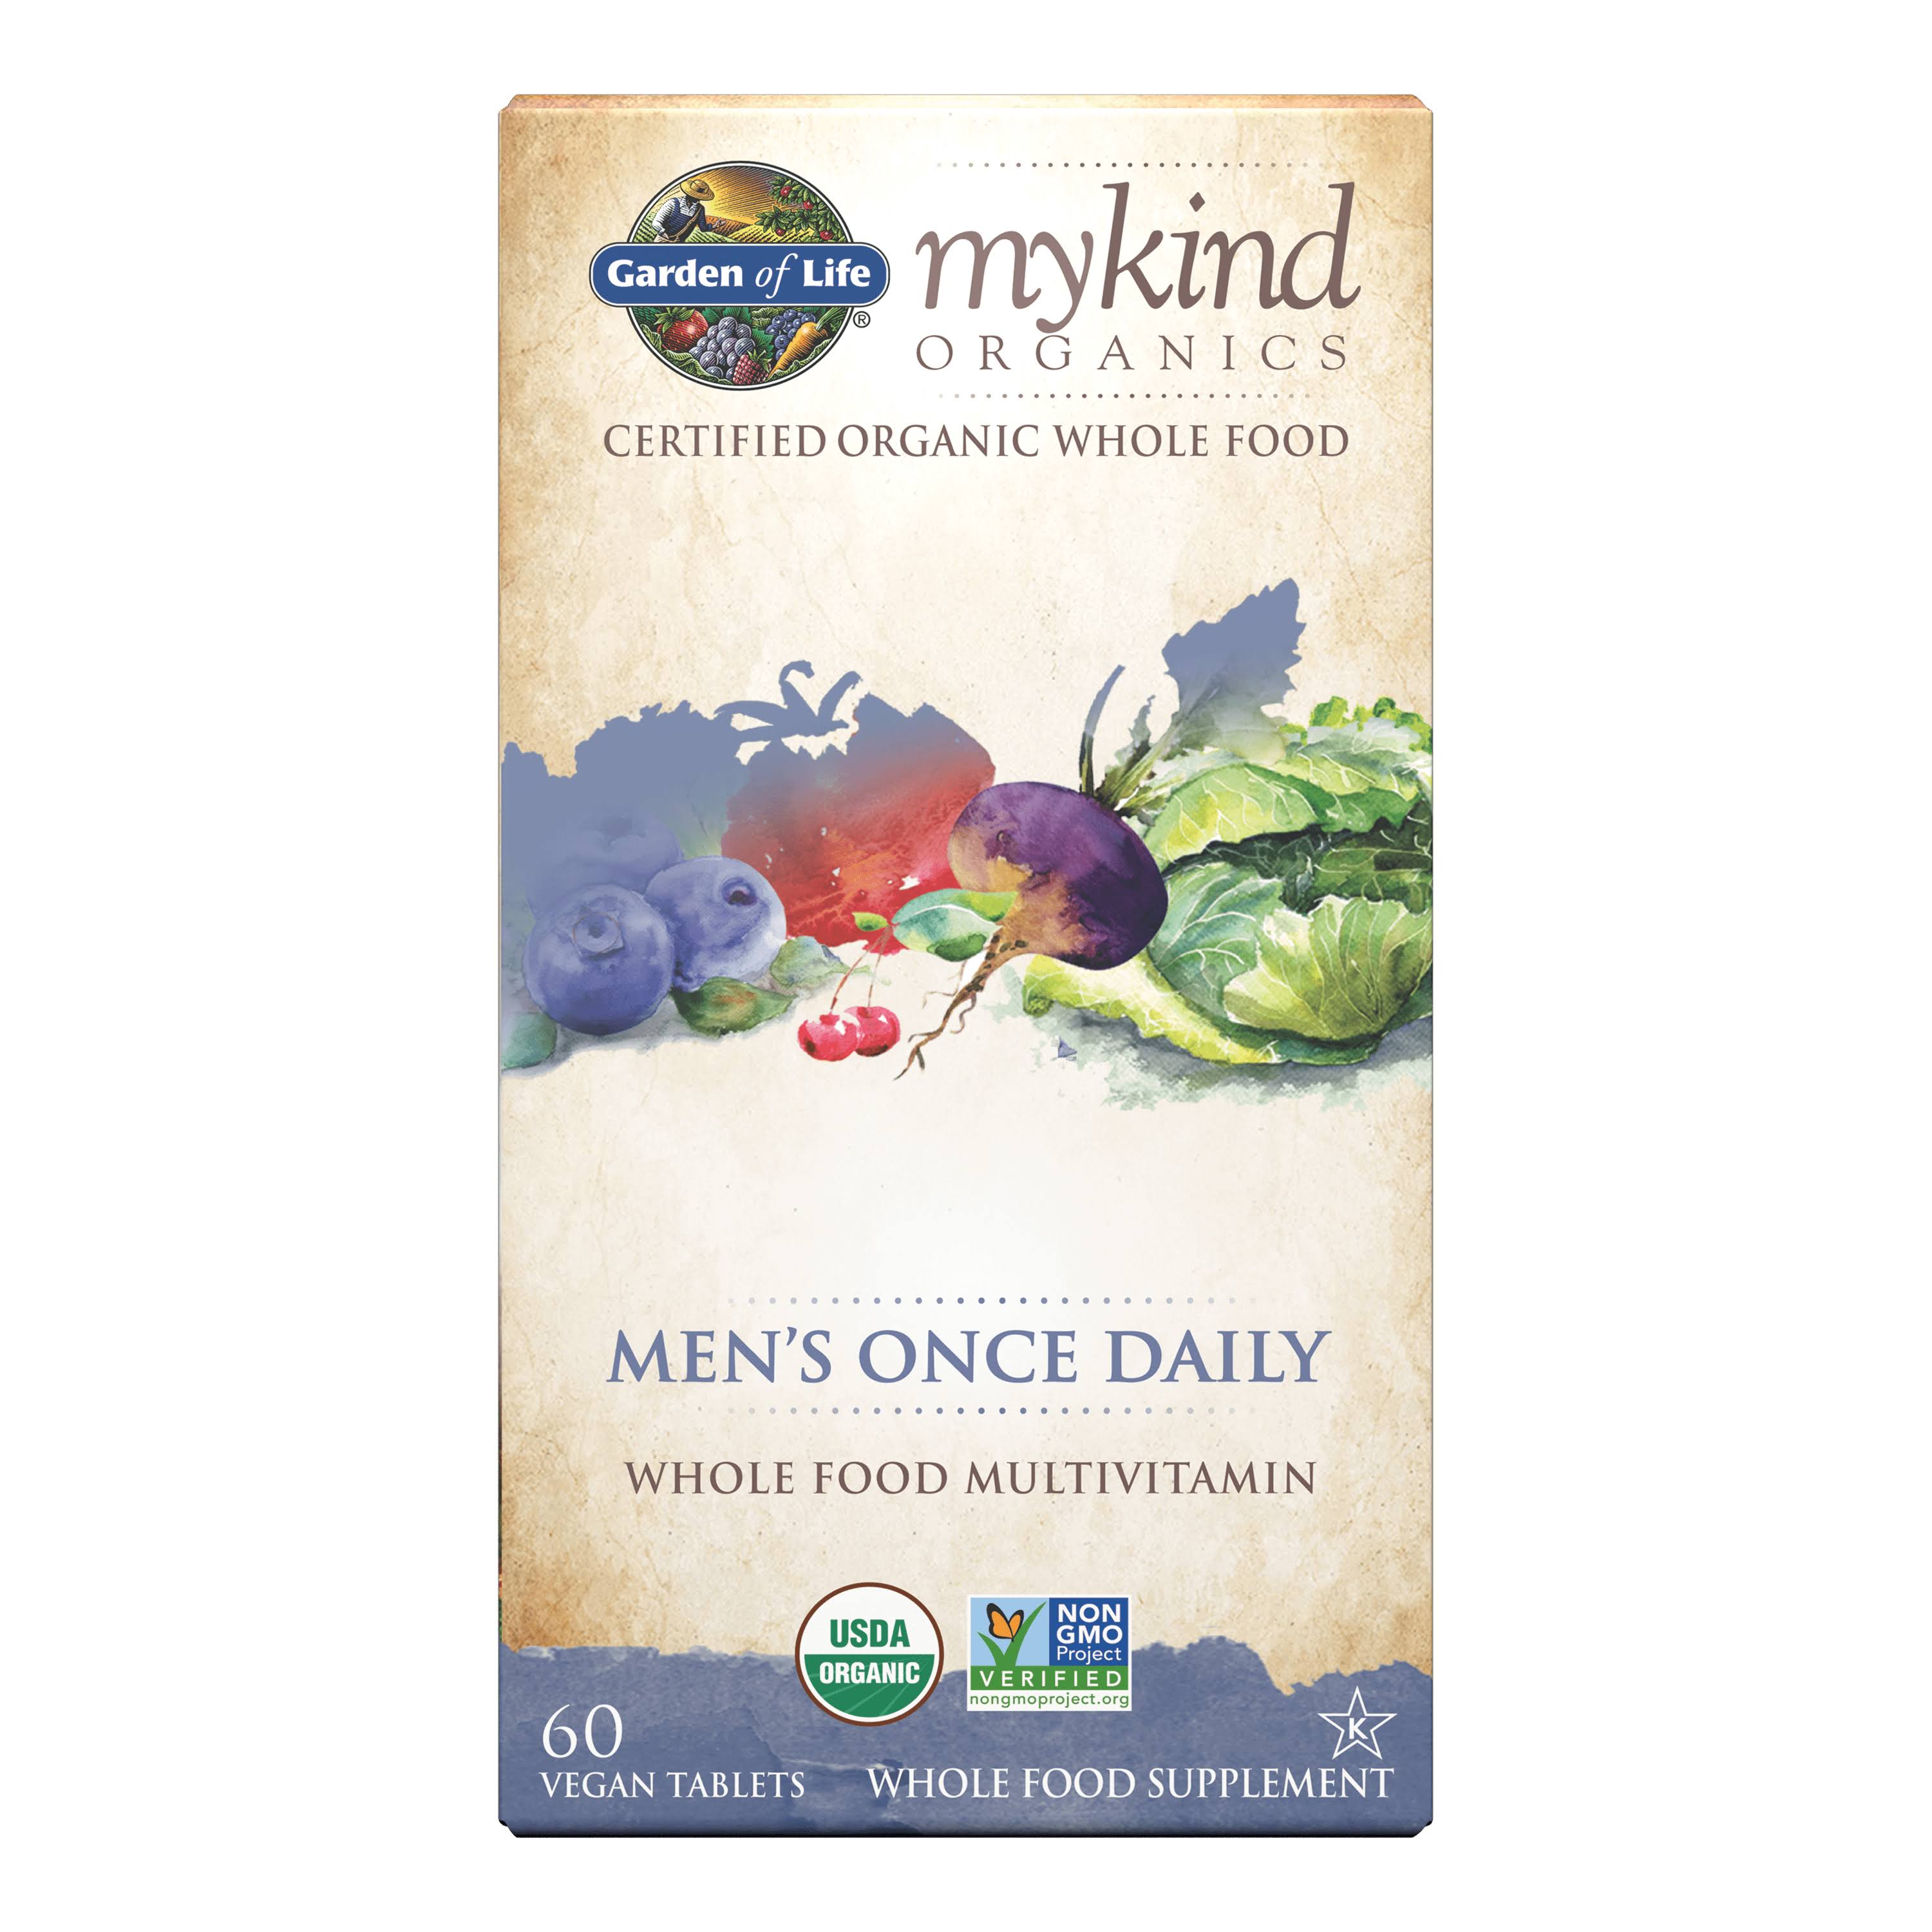 Garden of Life Kind Organics Men´s Once Daily Multivitamin - 60 Tablets